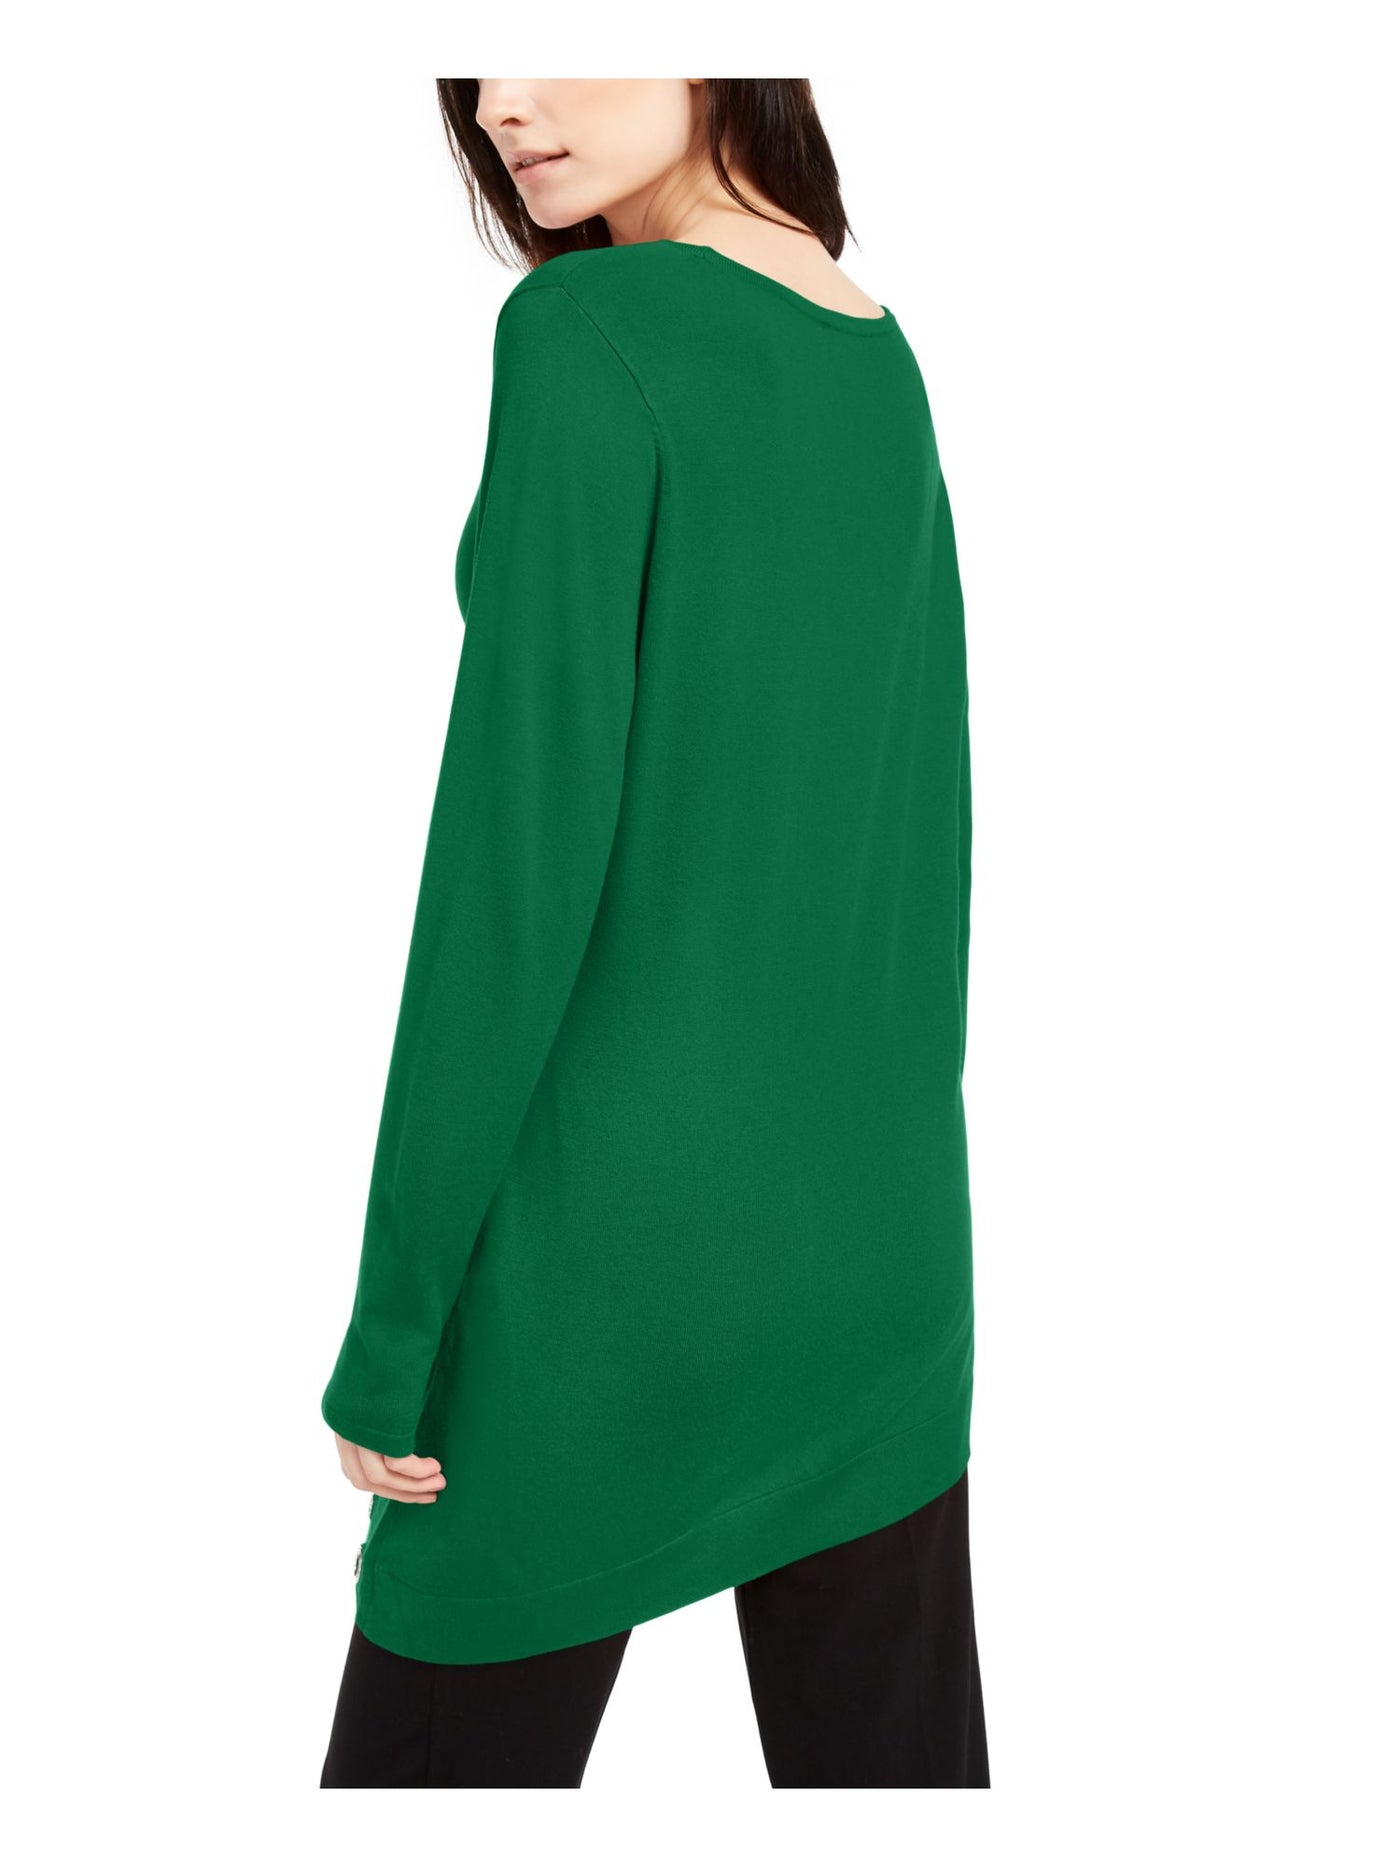 INC Womens Green Embellished Long Sleeve Jewel Neck Top S